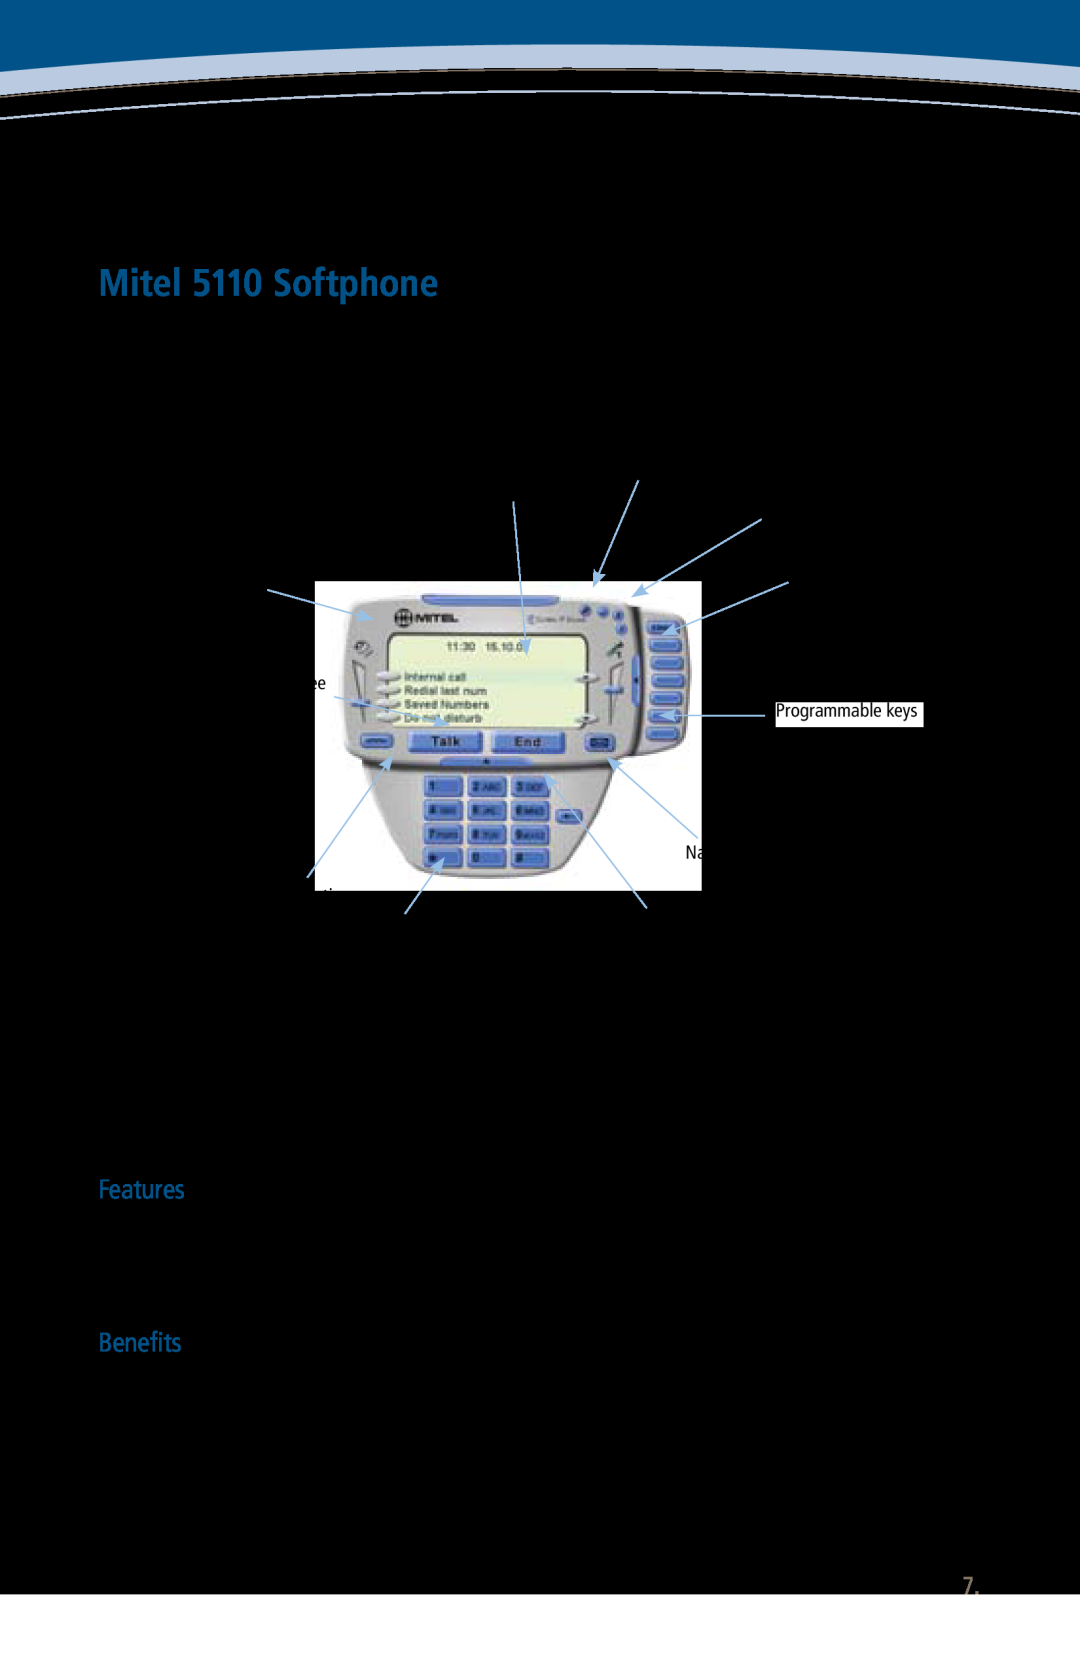 Mitel Mitel 5110 Softphone, Features, Menu-driven user-interface similar to the Mitel 3000 system phones, Benefits 